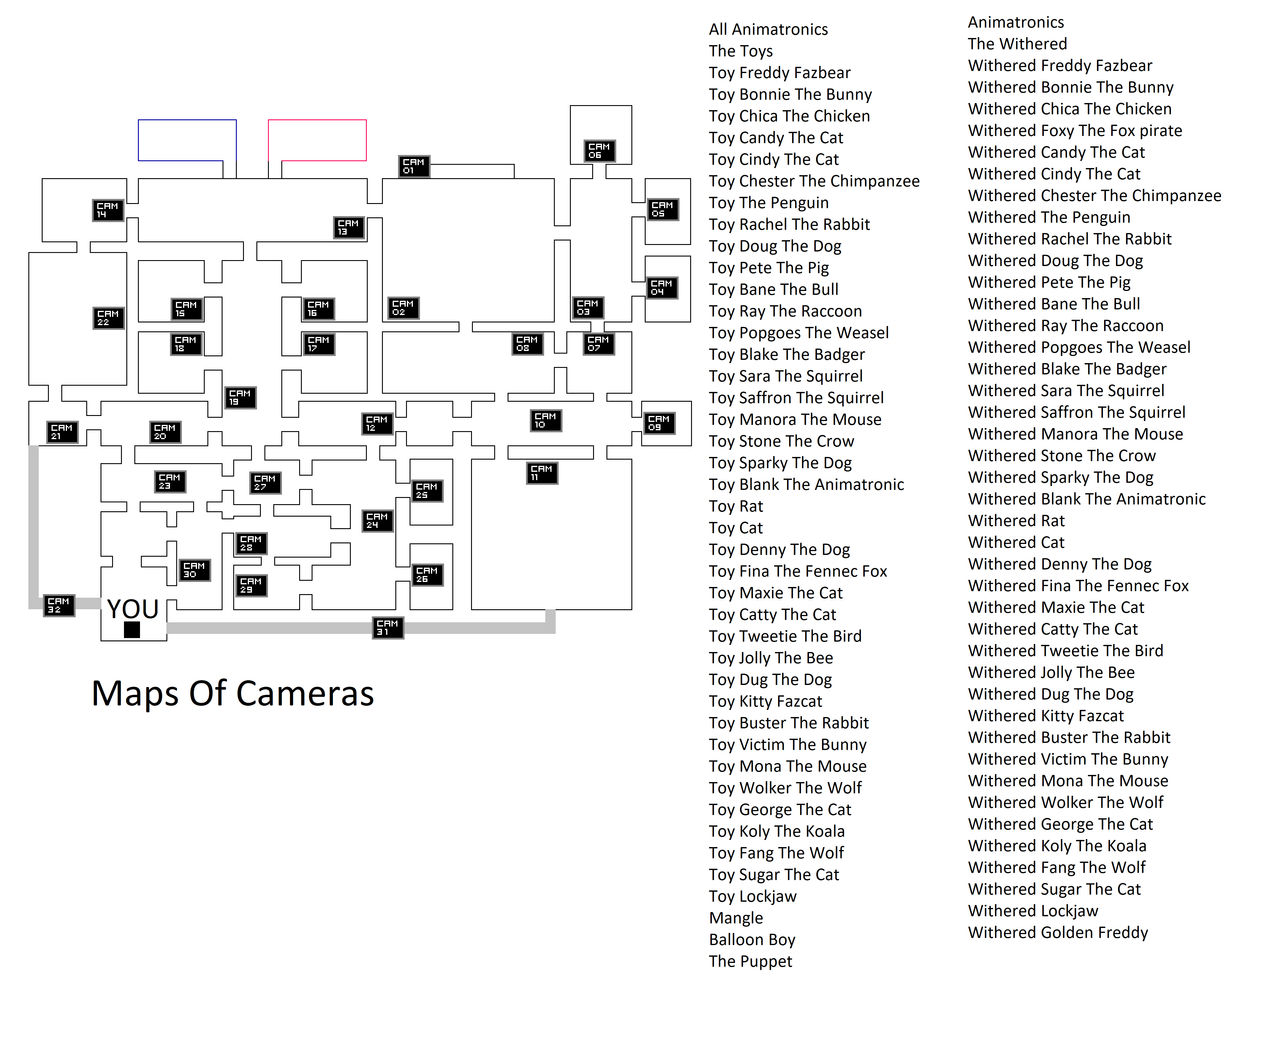 The New FNAF Camera Map by SuperG-Bot on DeviantArt